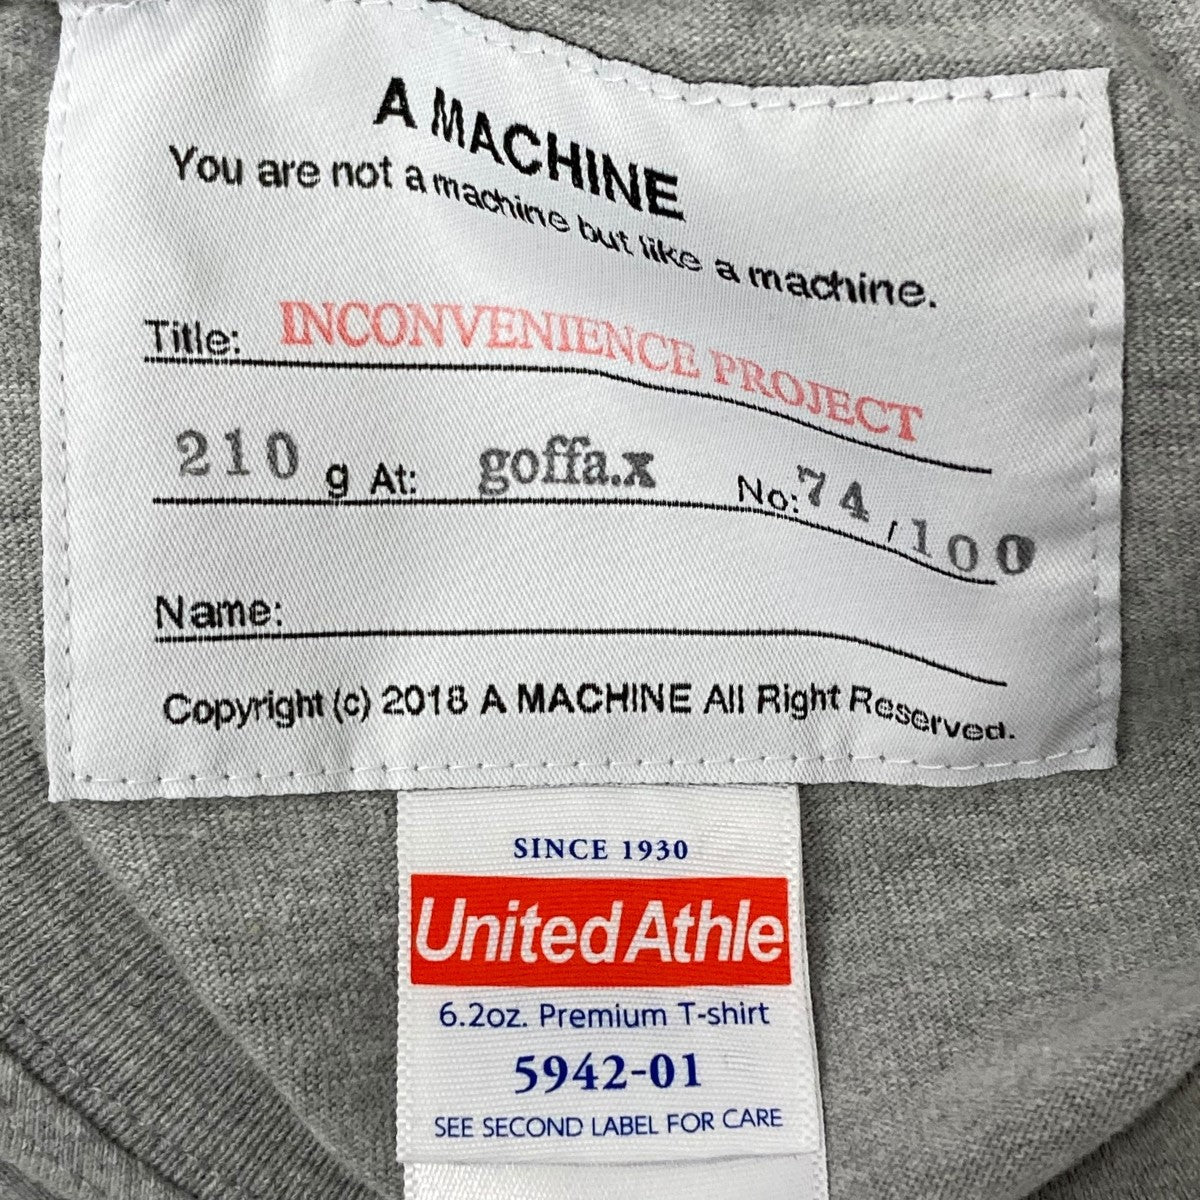 A MACHINE×goffa INCONVENIENCE PROJECT Tシャツ グレー サイズ 14 ...